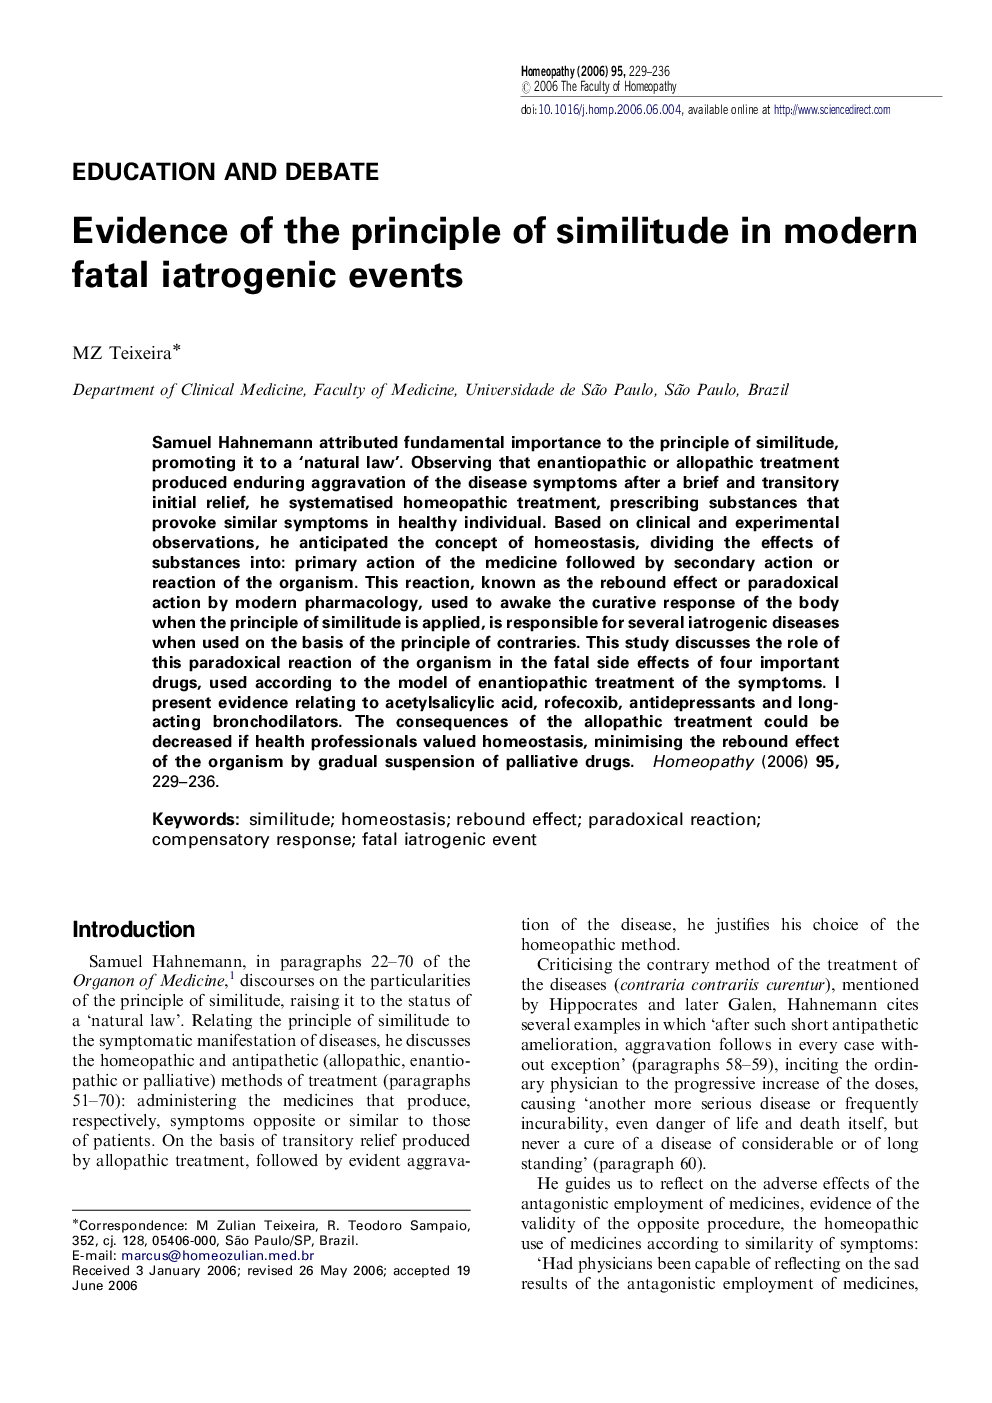 Evidence of the principle of similitude in modern fatal iatrogenic events